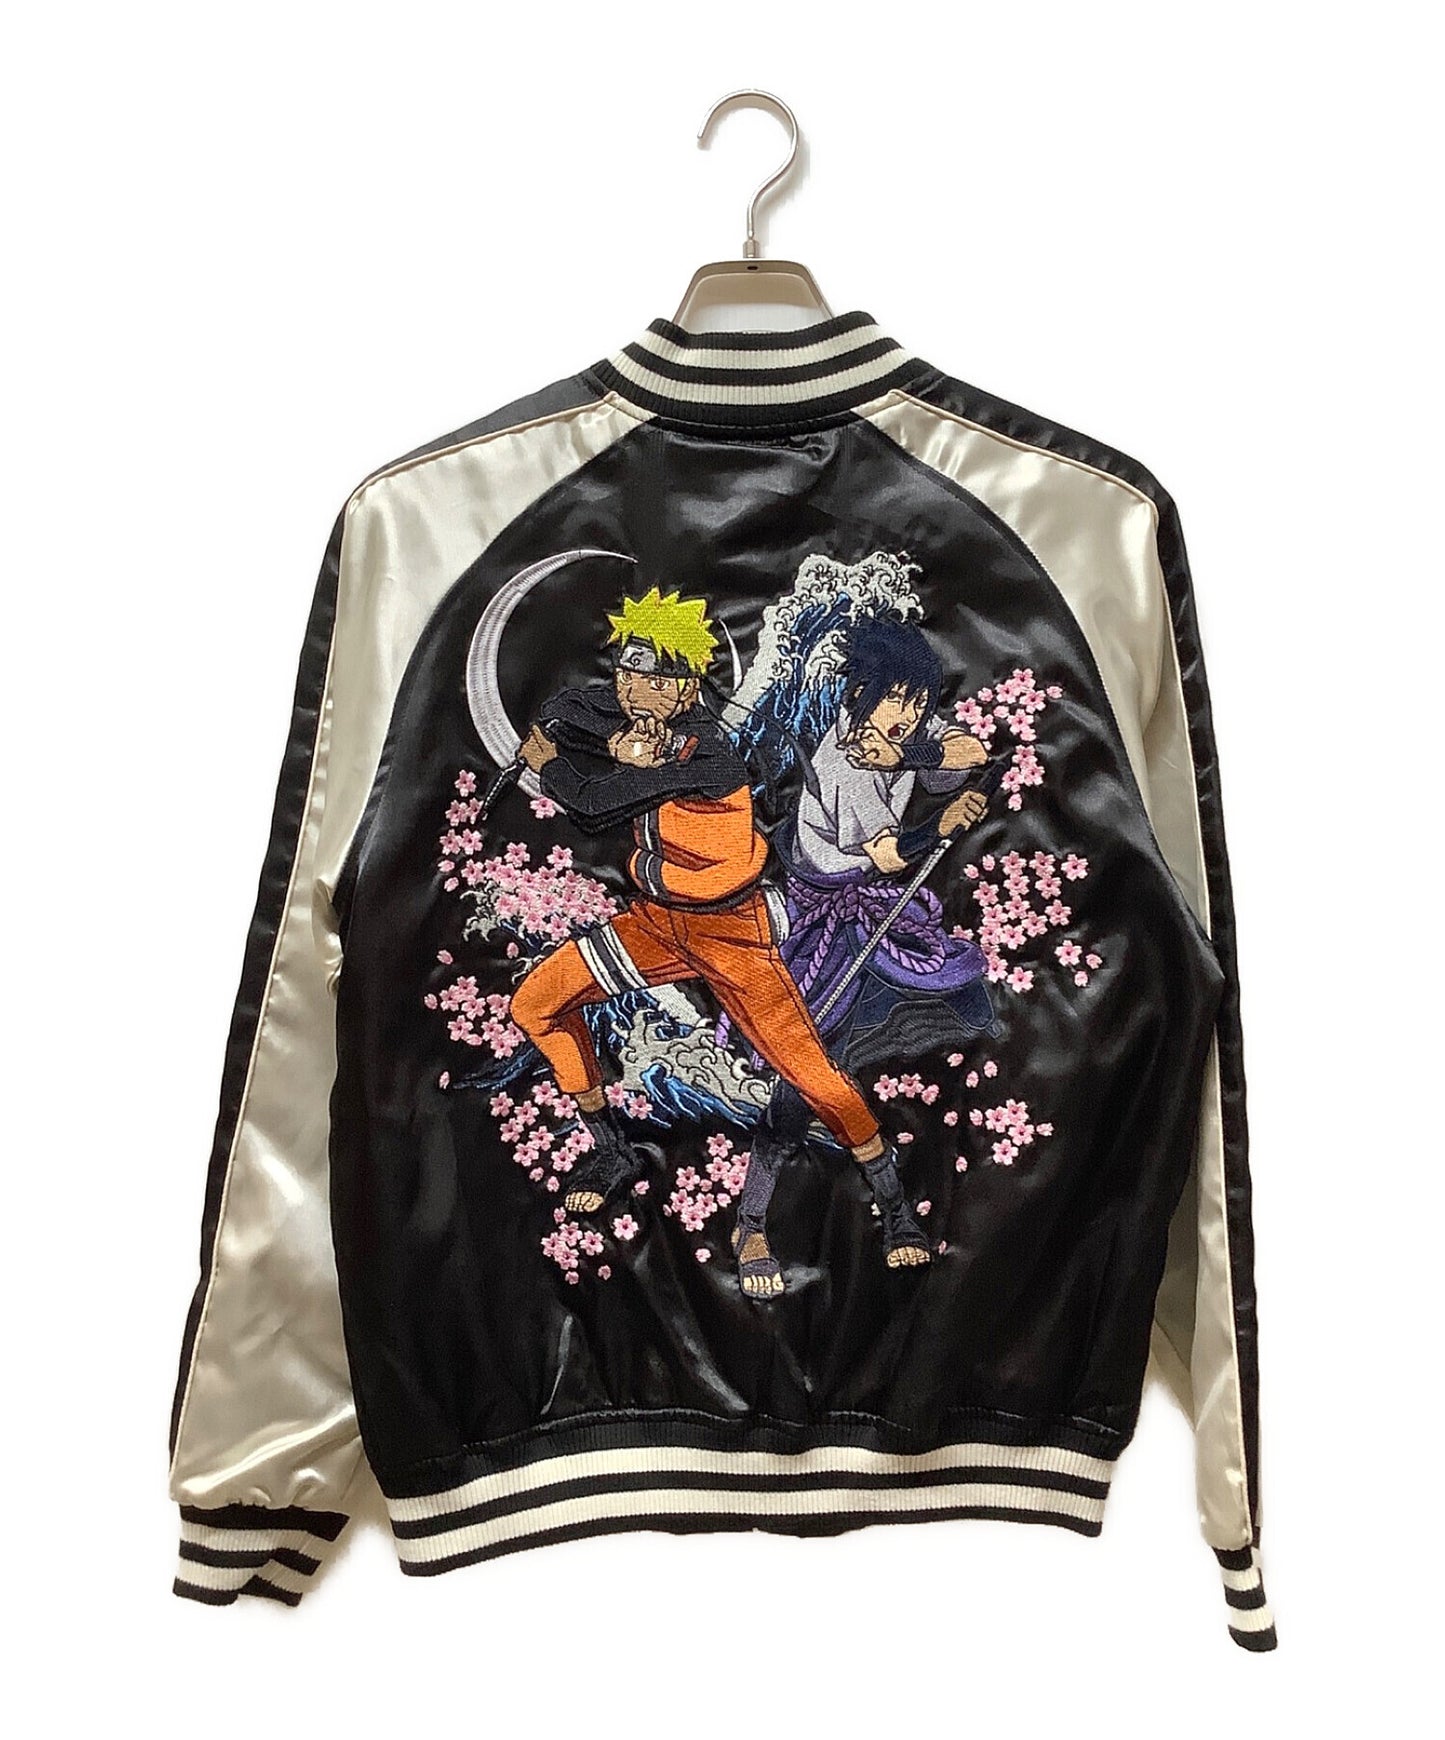 Oboro x Naruto Shippuden Naruto & Sasuke Character Souvenir Jacket 9001821